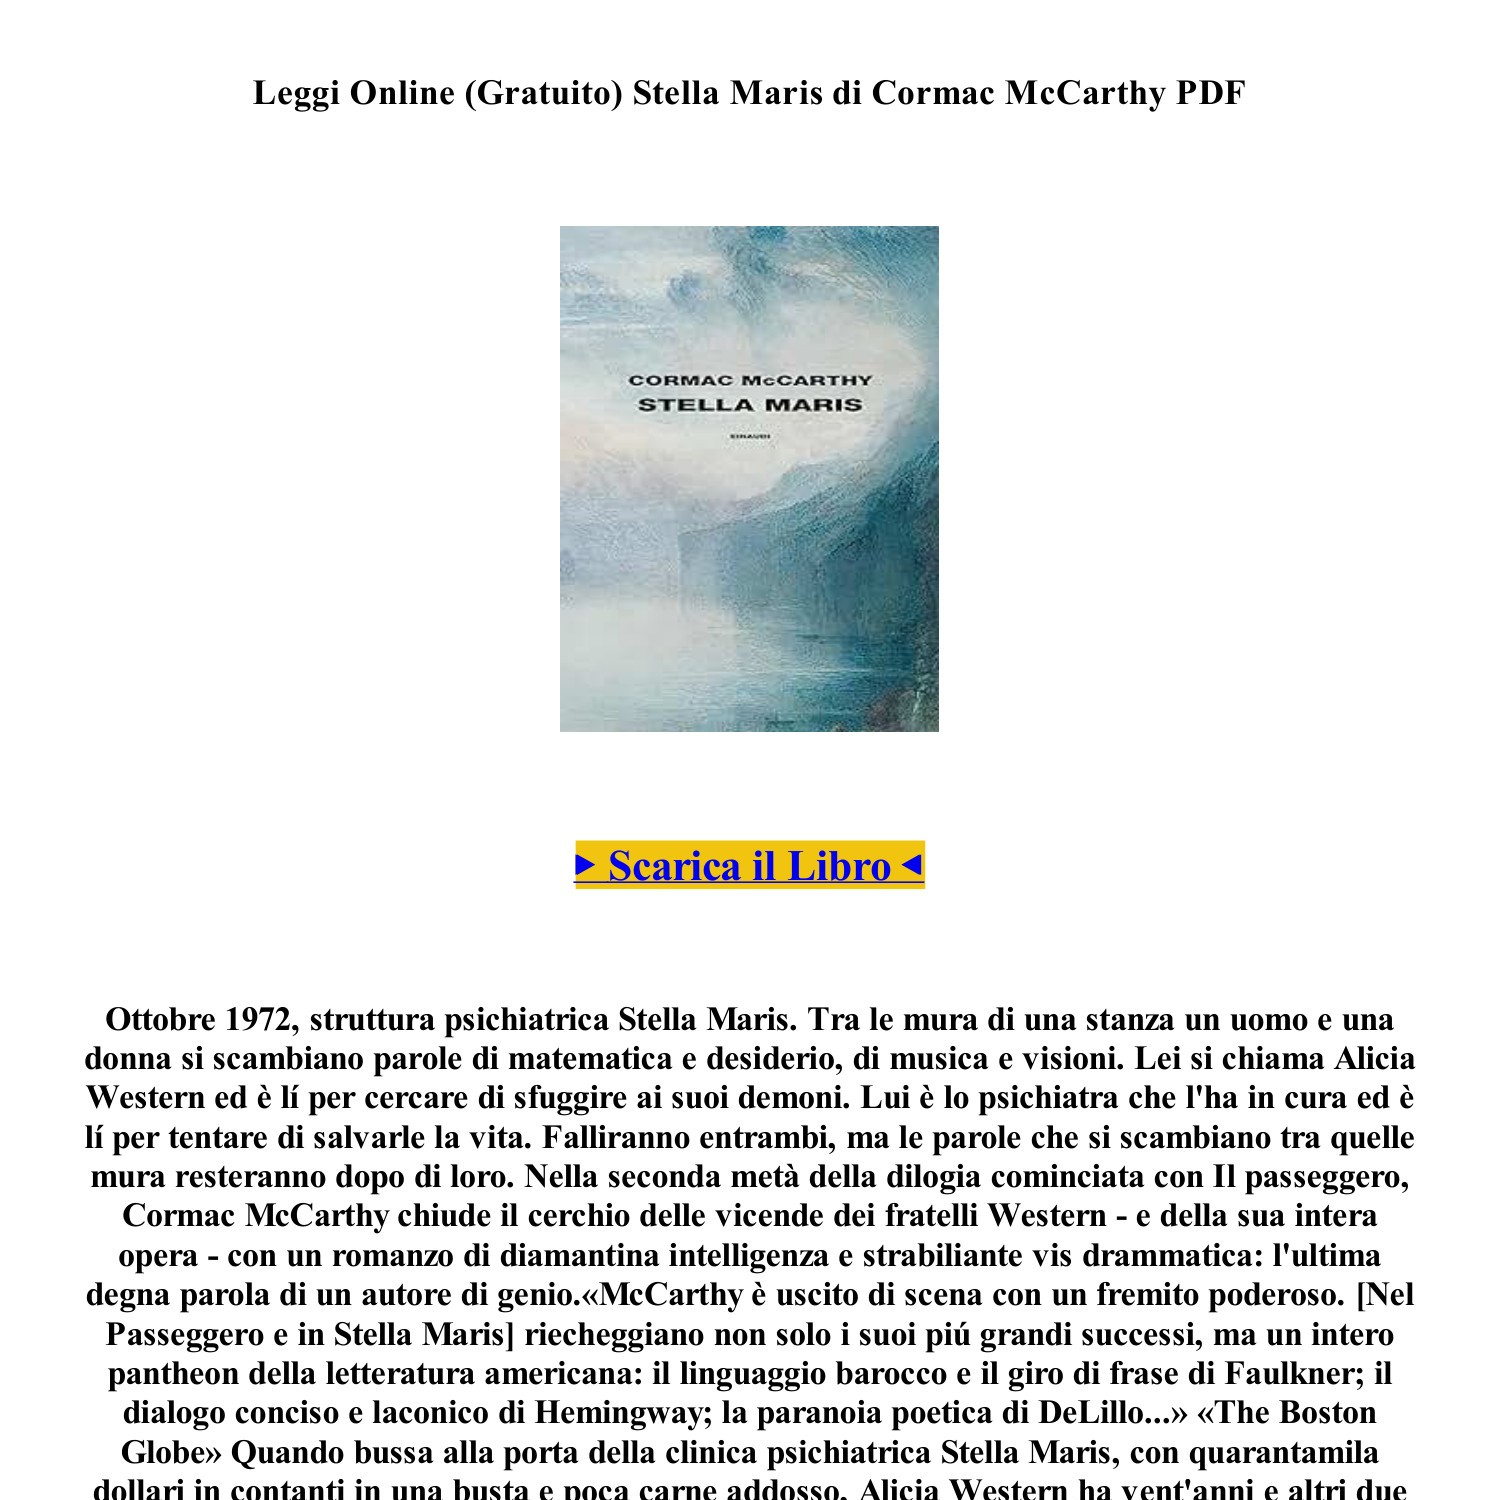 epub (Gratuito) Stella Maris di Cormac McCarthy pdf (3TX76).pdf